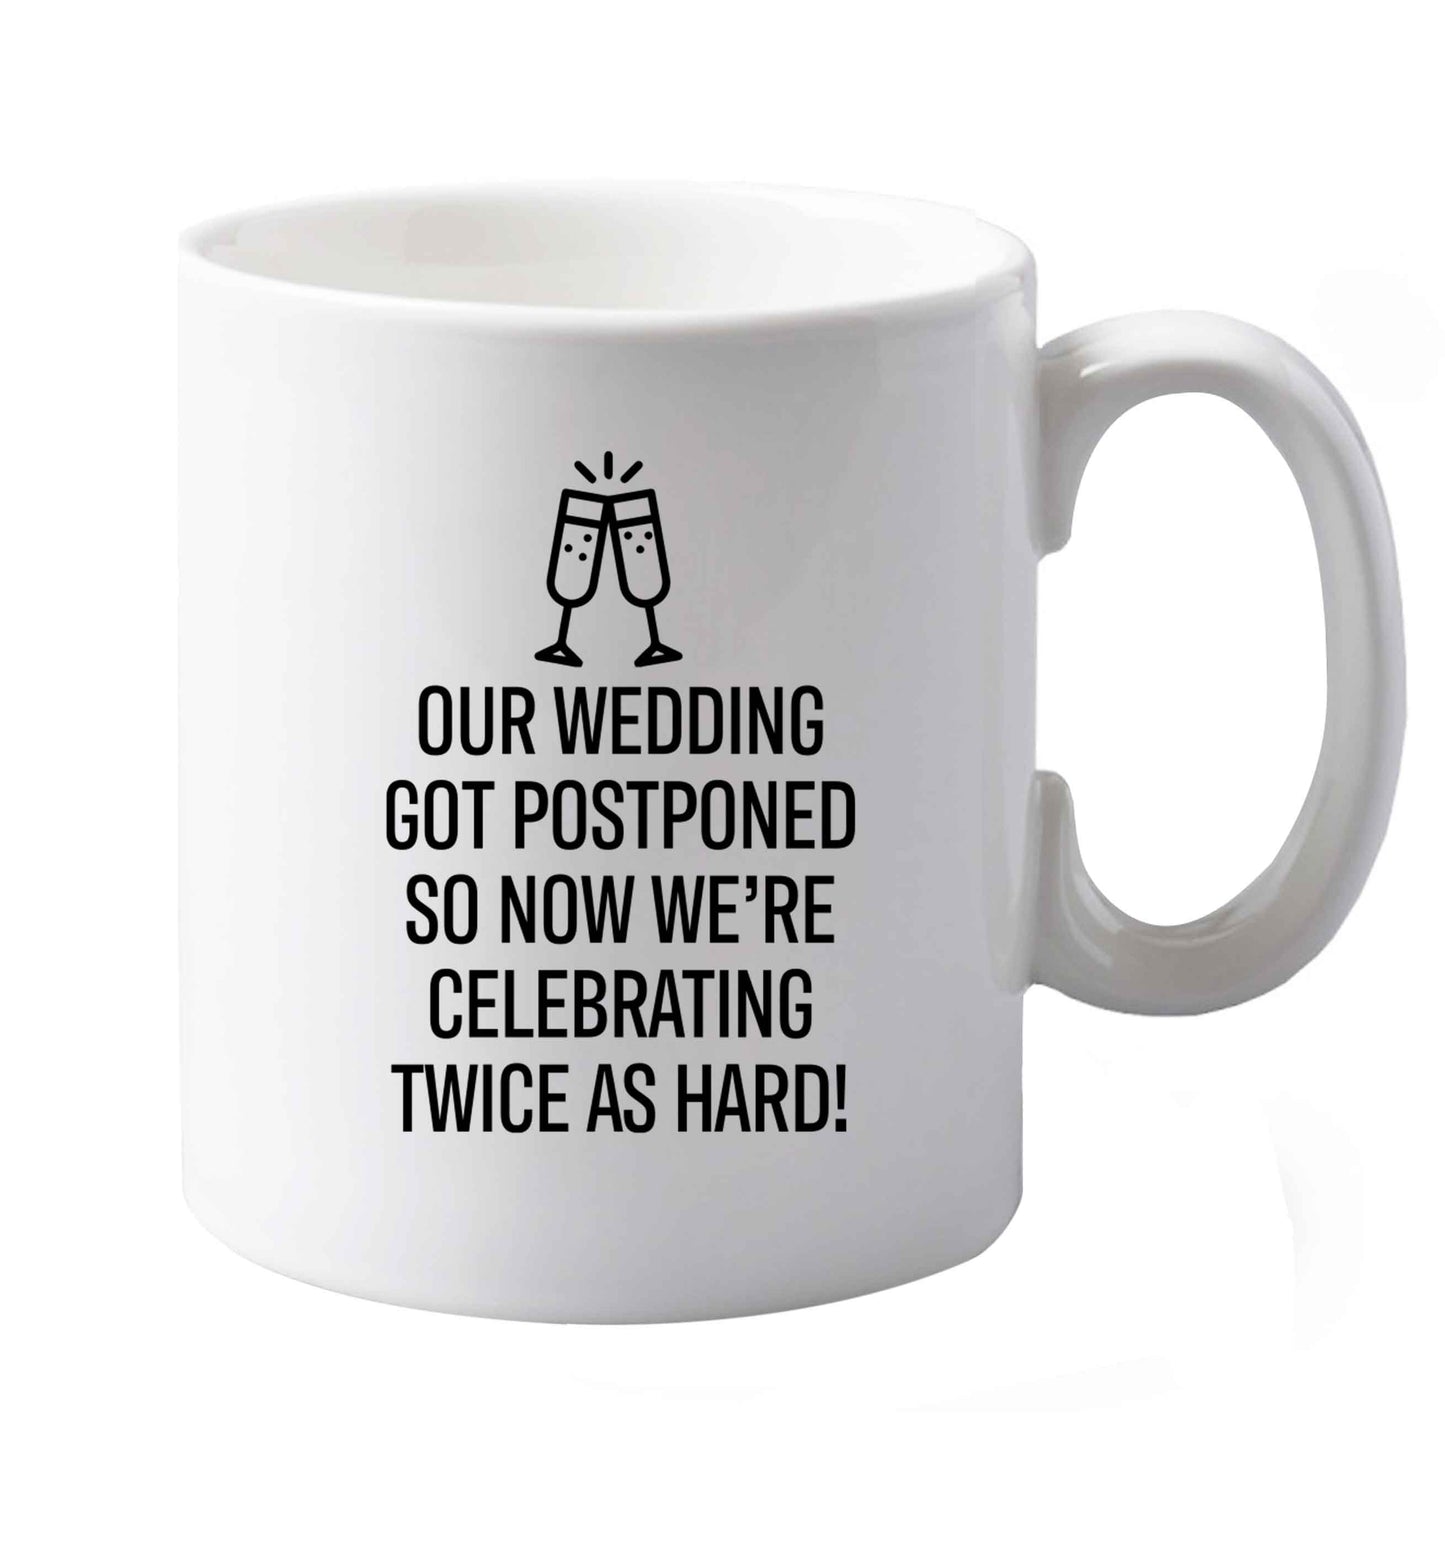 10 oz Postponed wedding? Sounds like an excuse to party twice as hard!    ceramic mug both sides